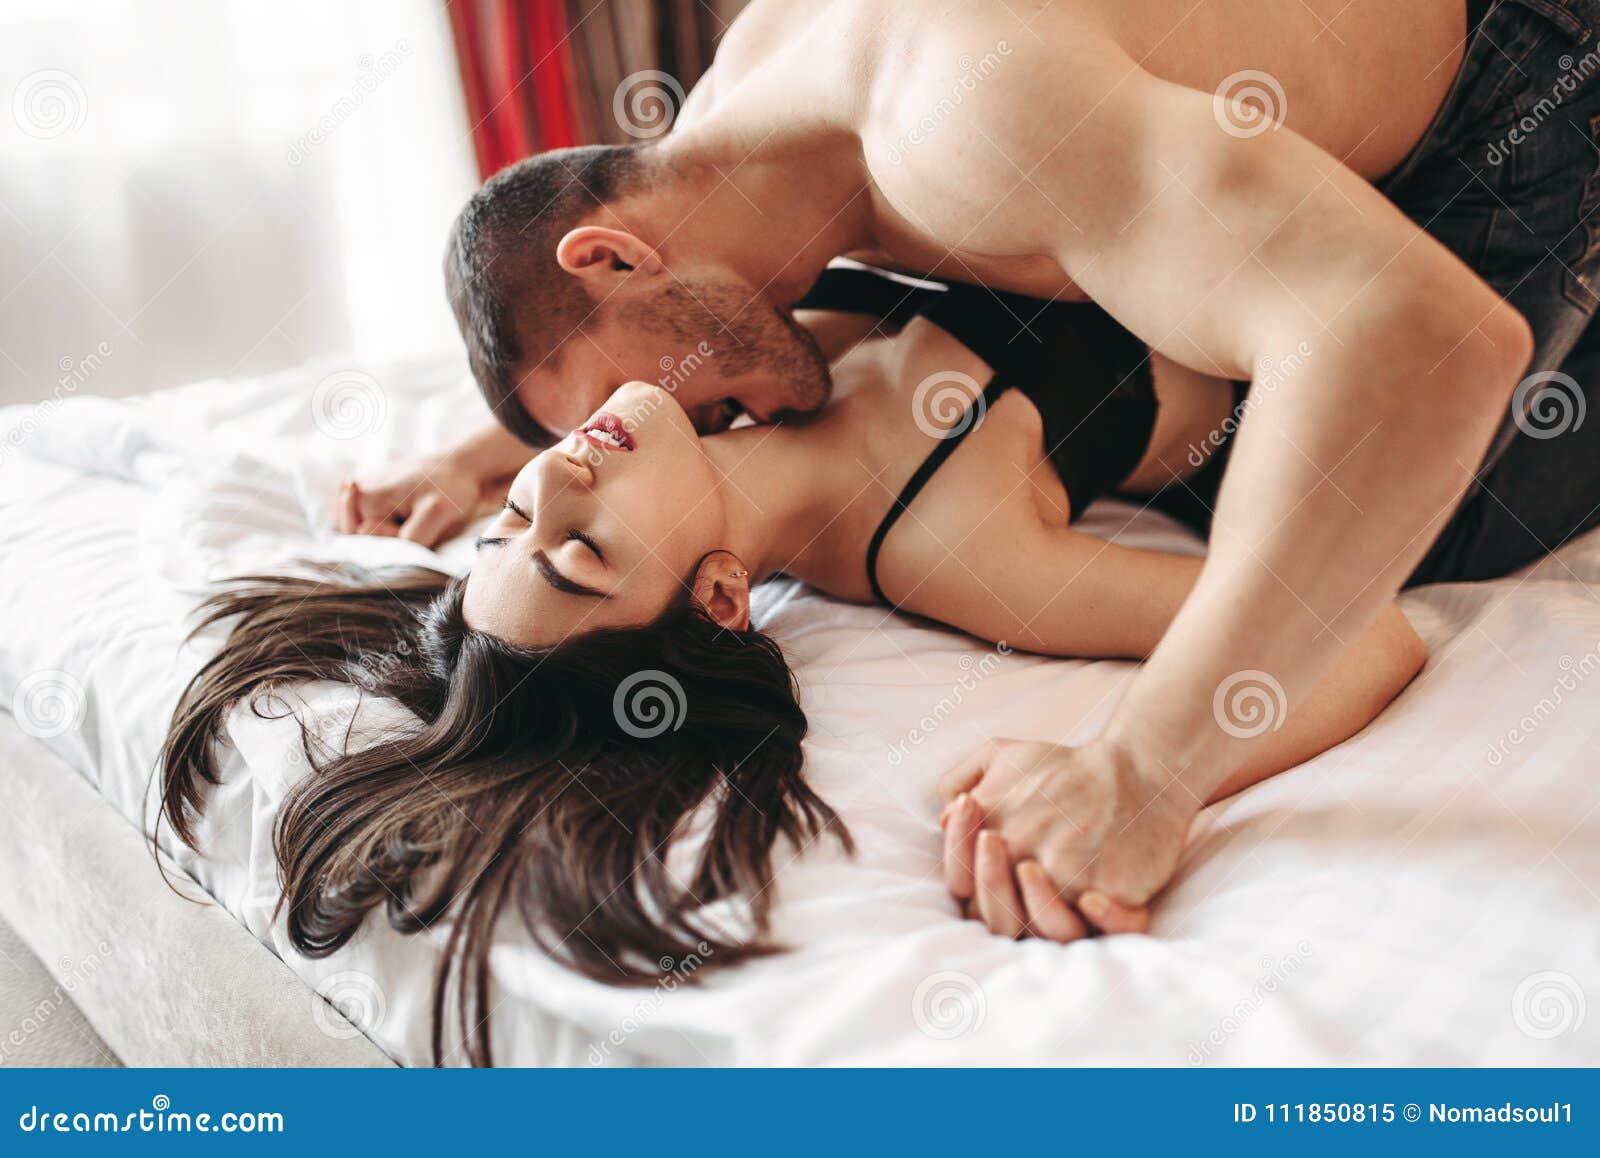 deepak padmakumar add sexy sex on bed photo